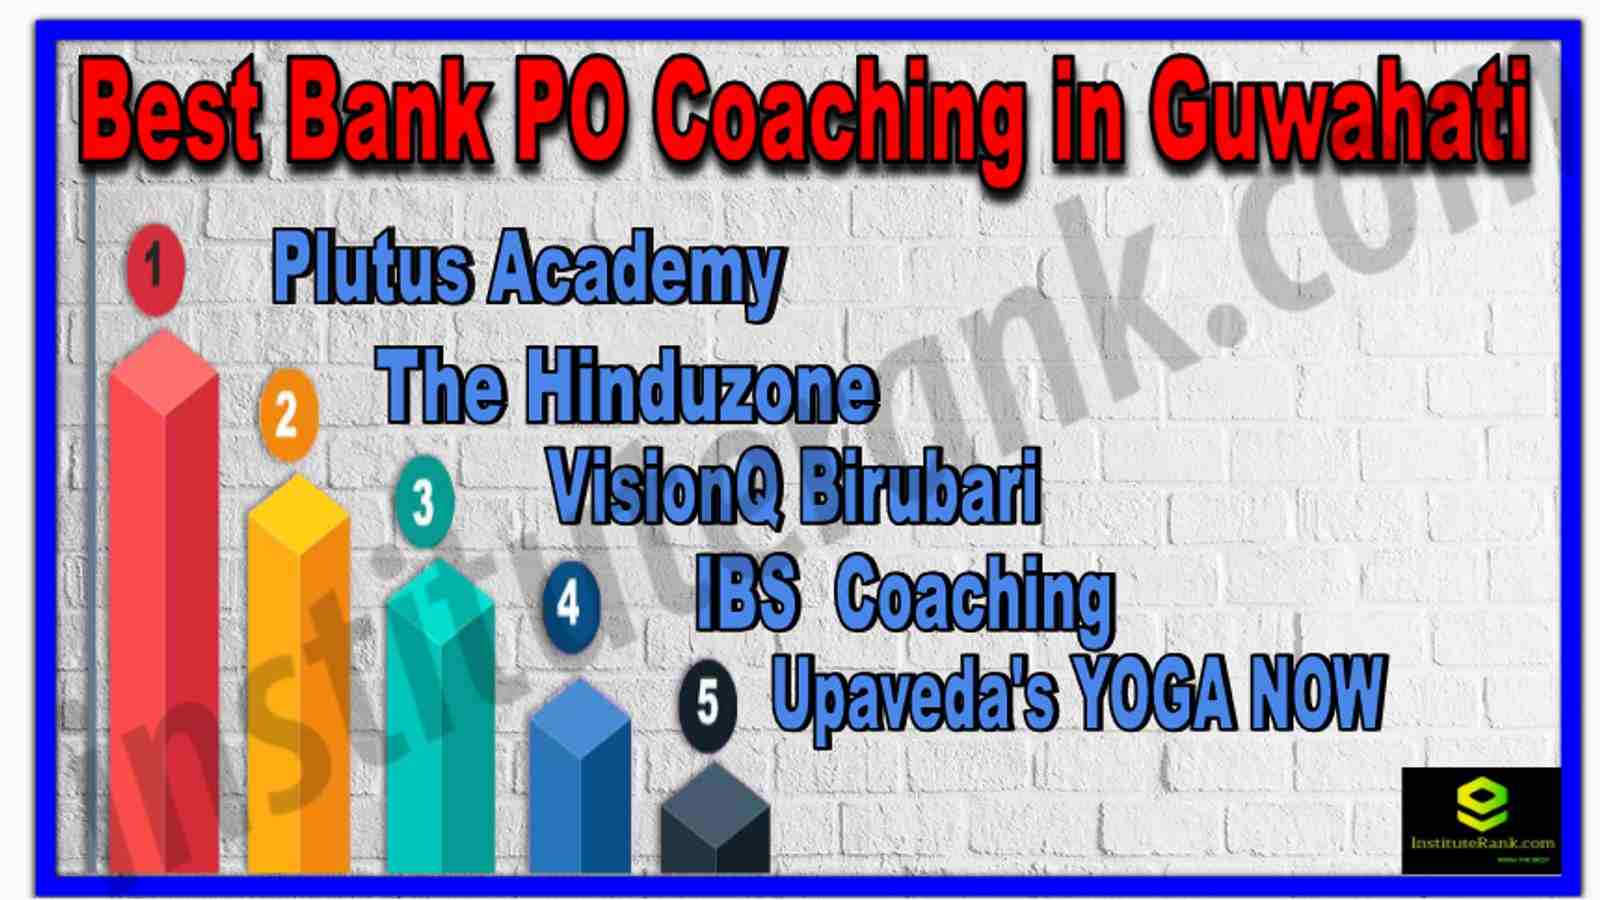 Best Bank PO Coaching in Guwahati